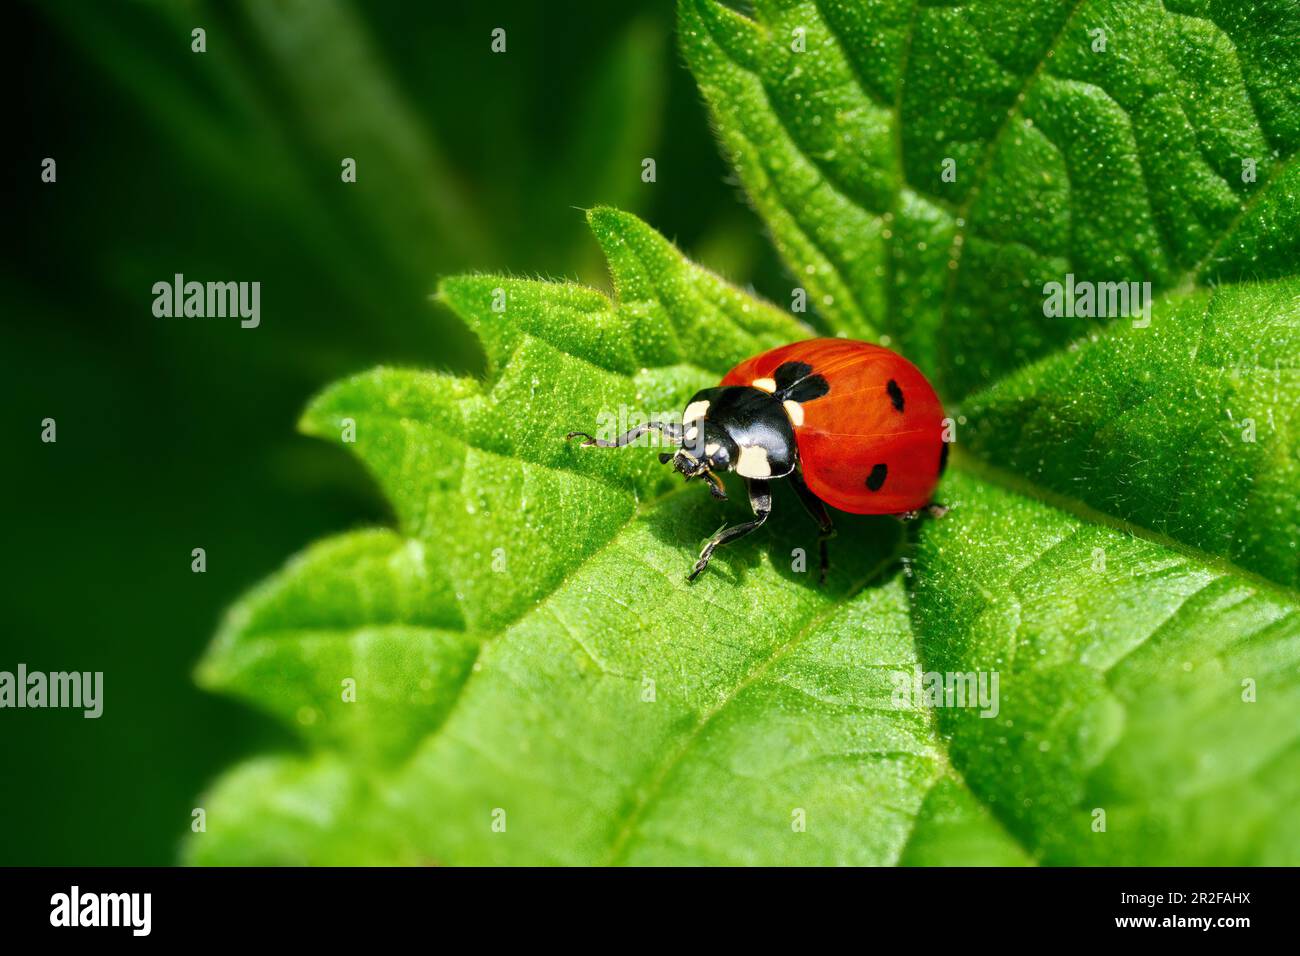 Ladybug on a green leaf with serrated edge Stock Photo